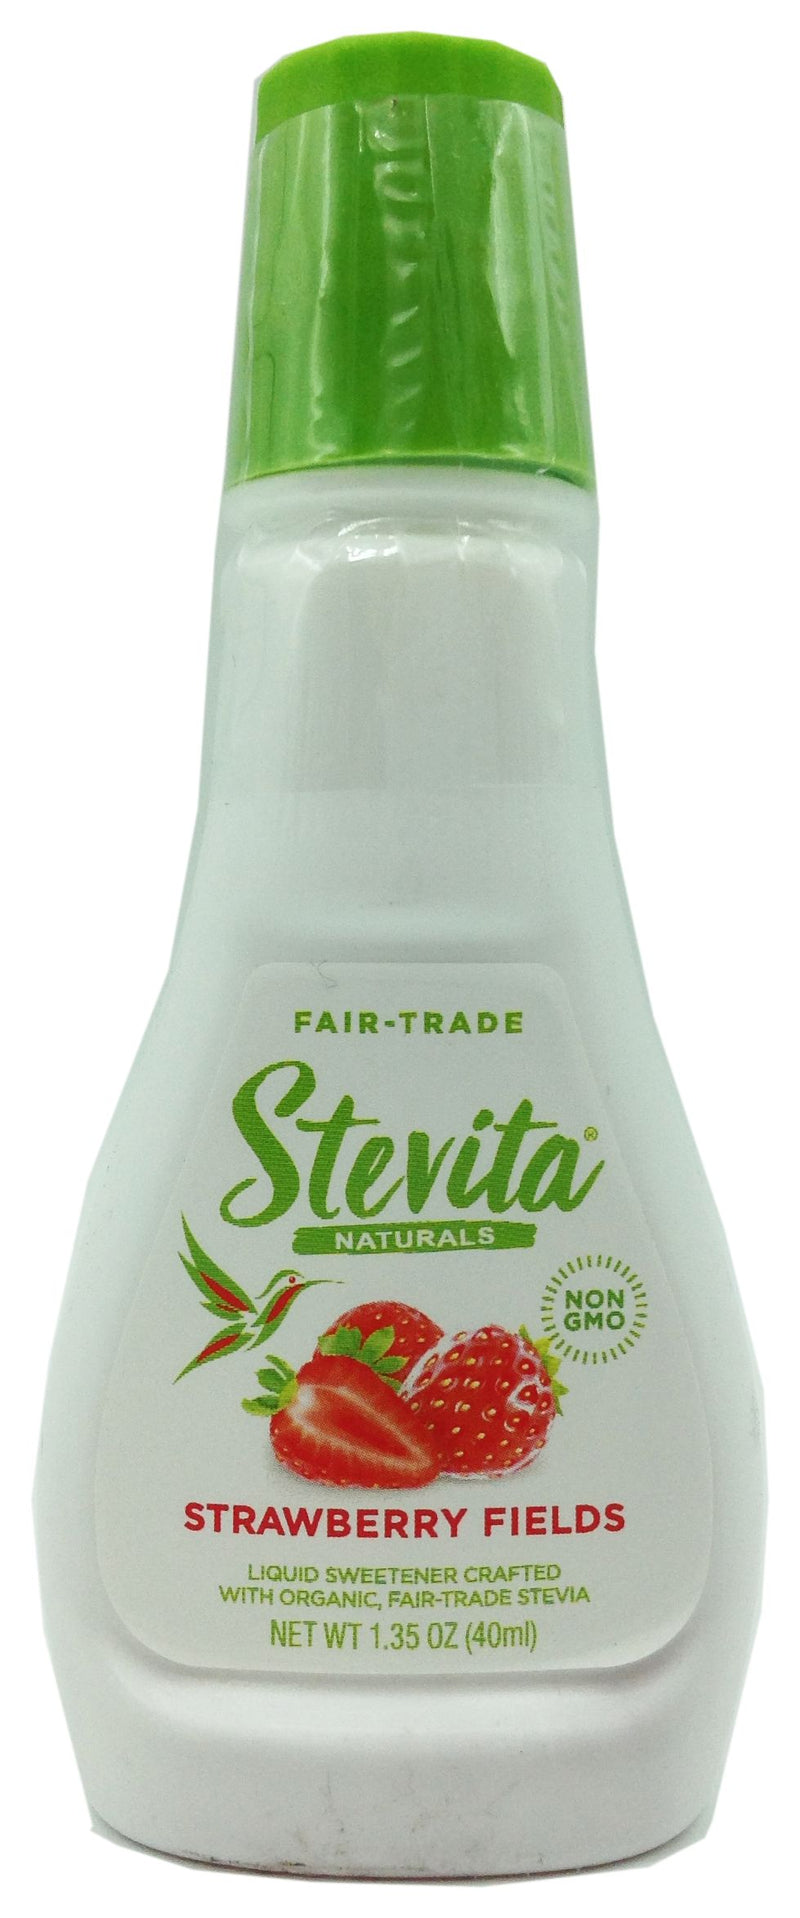 Stevita Flavored Liquid Stevia